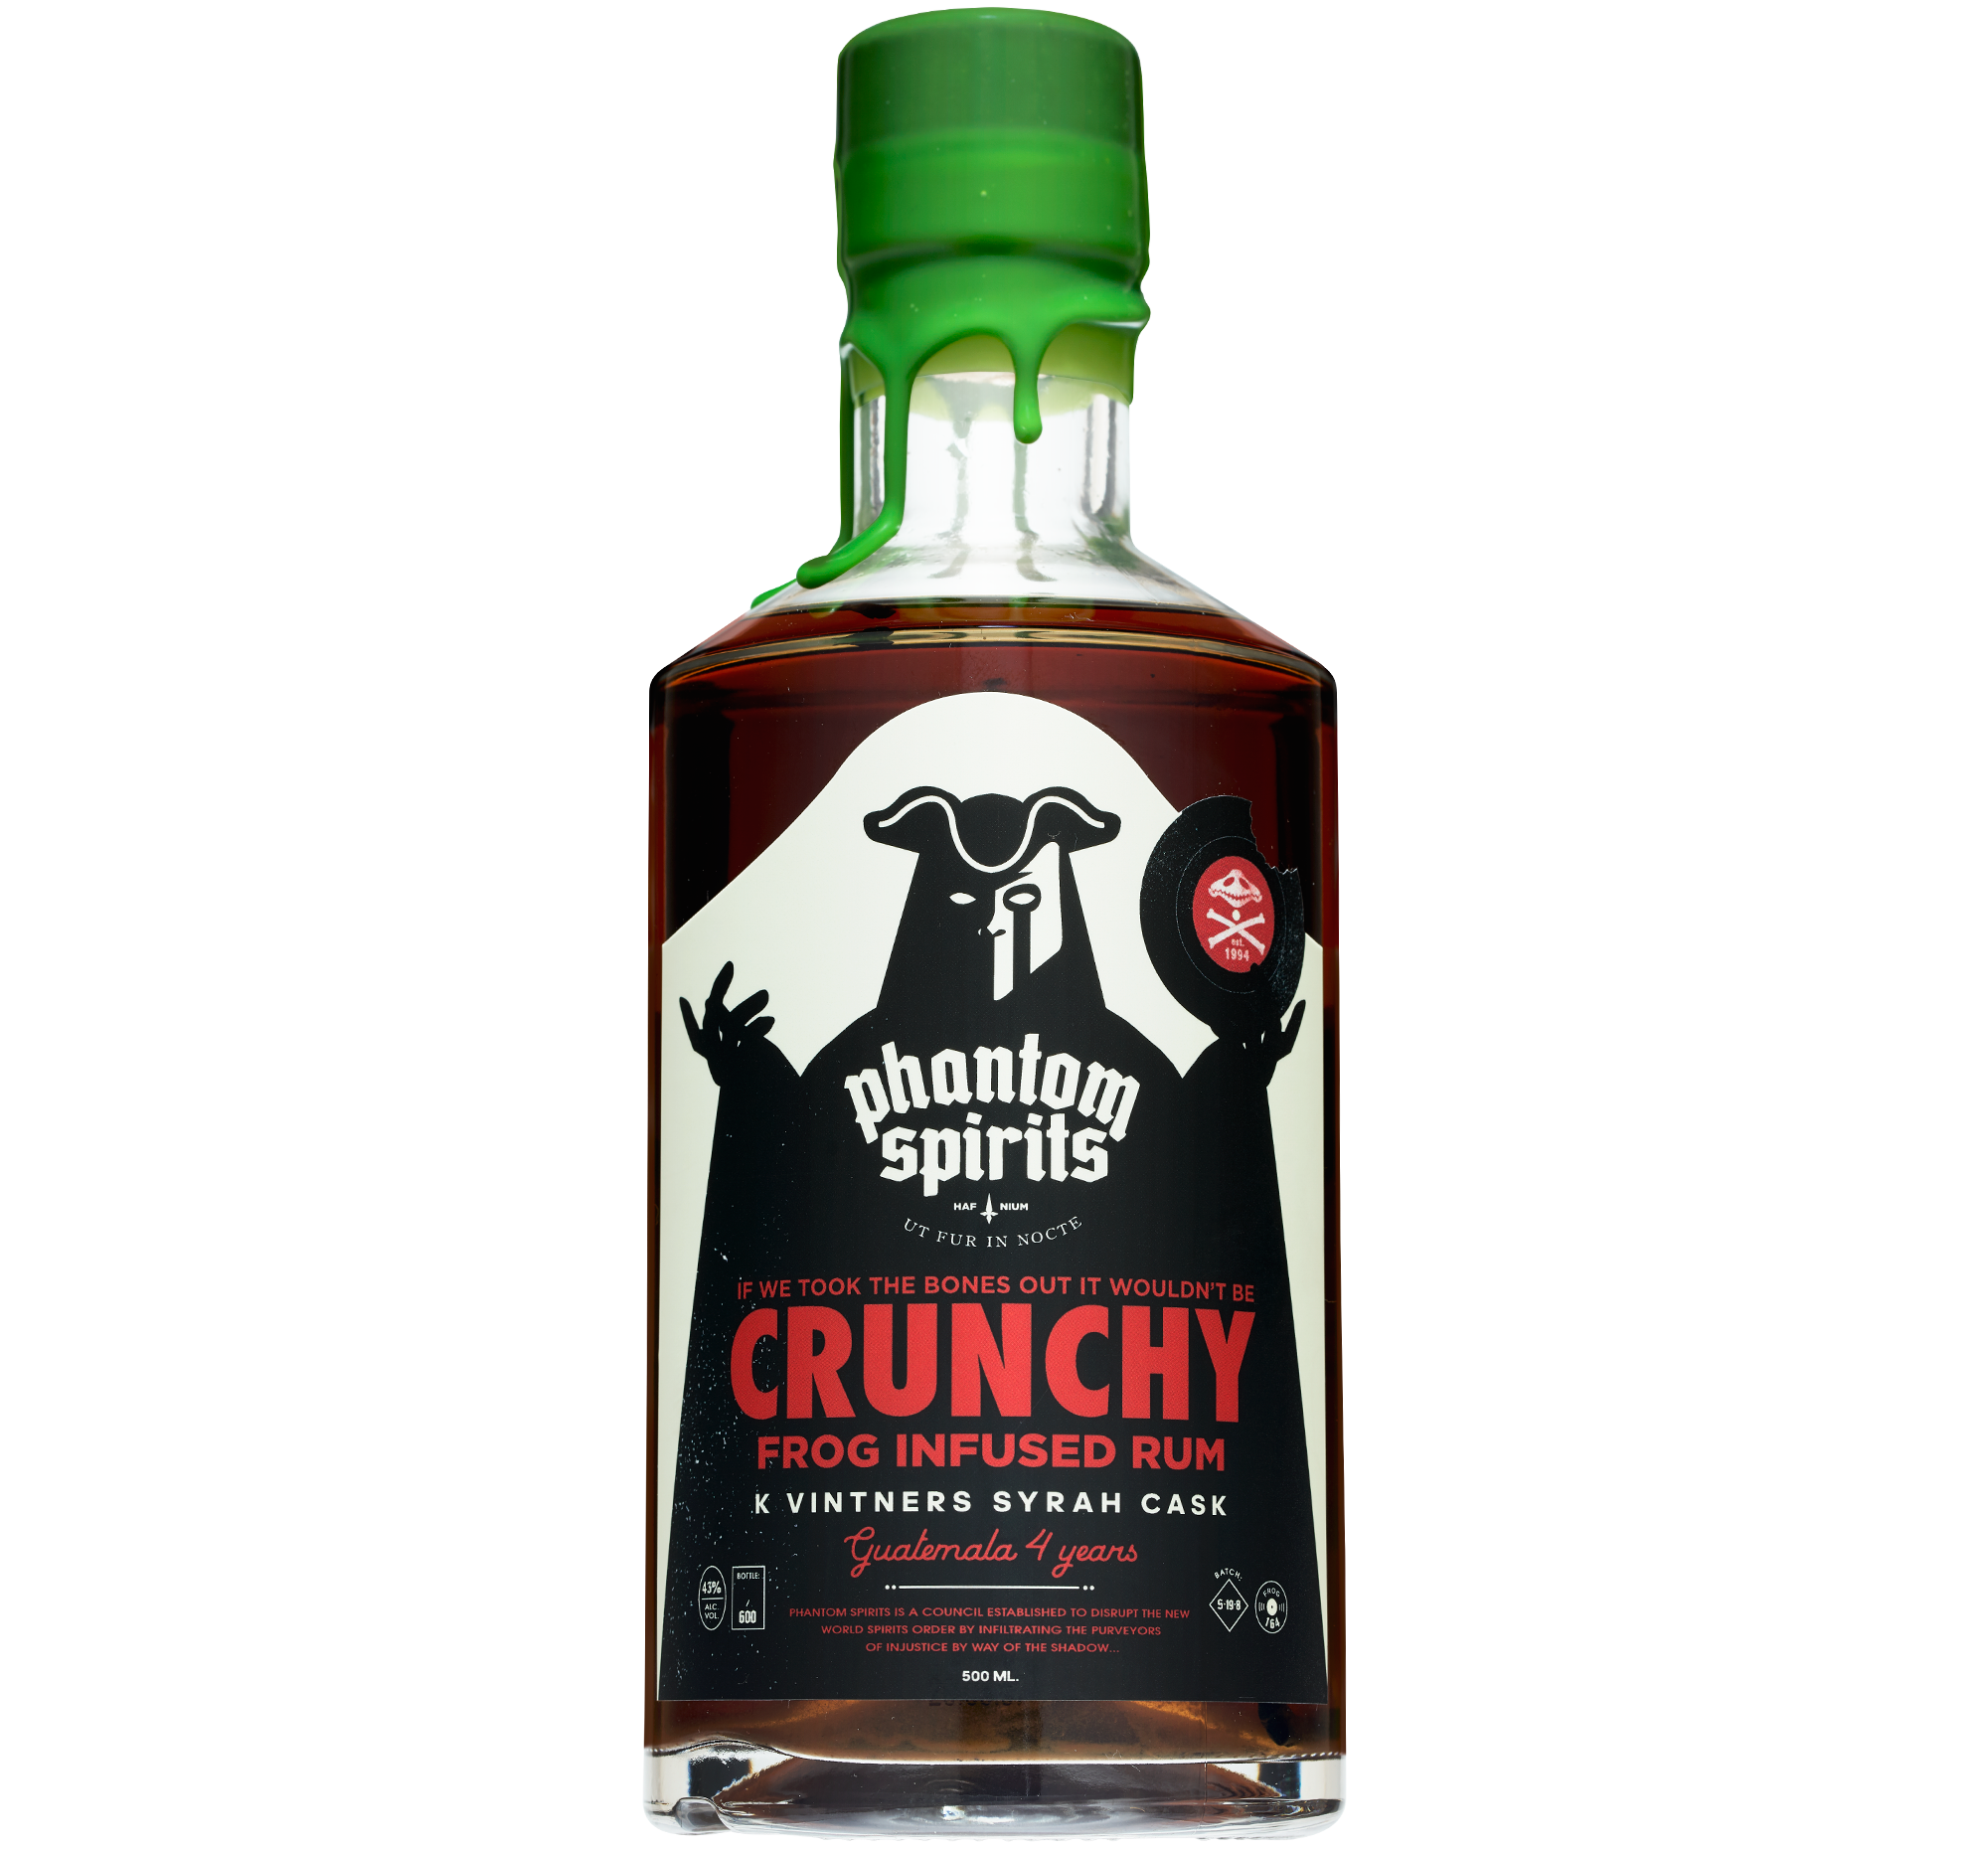 Phantom-Spirits-Crunchy-Frog-K-Vintners-Syrah-Cask-Guatemala-4yo-Rum-_-Coke-Edition---Front.png